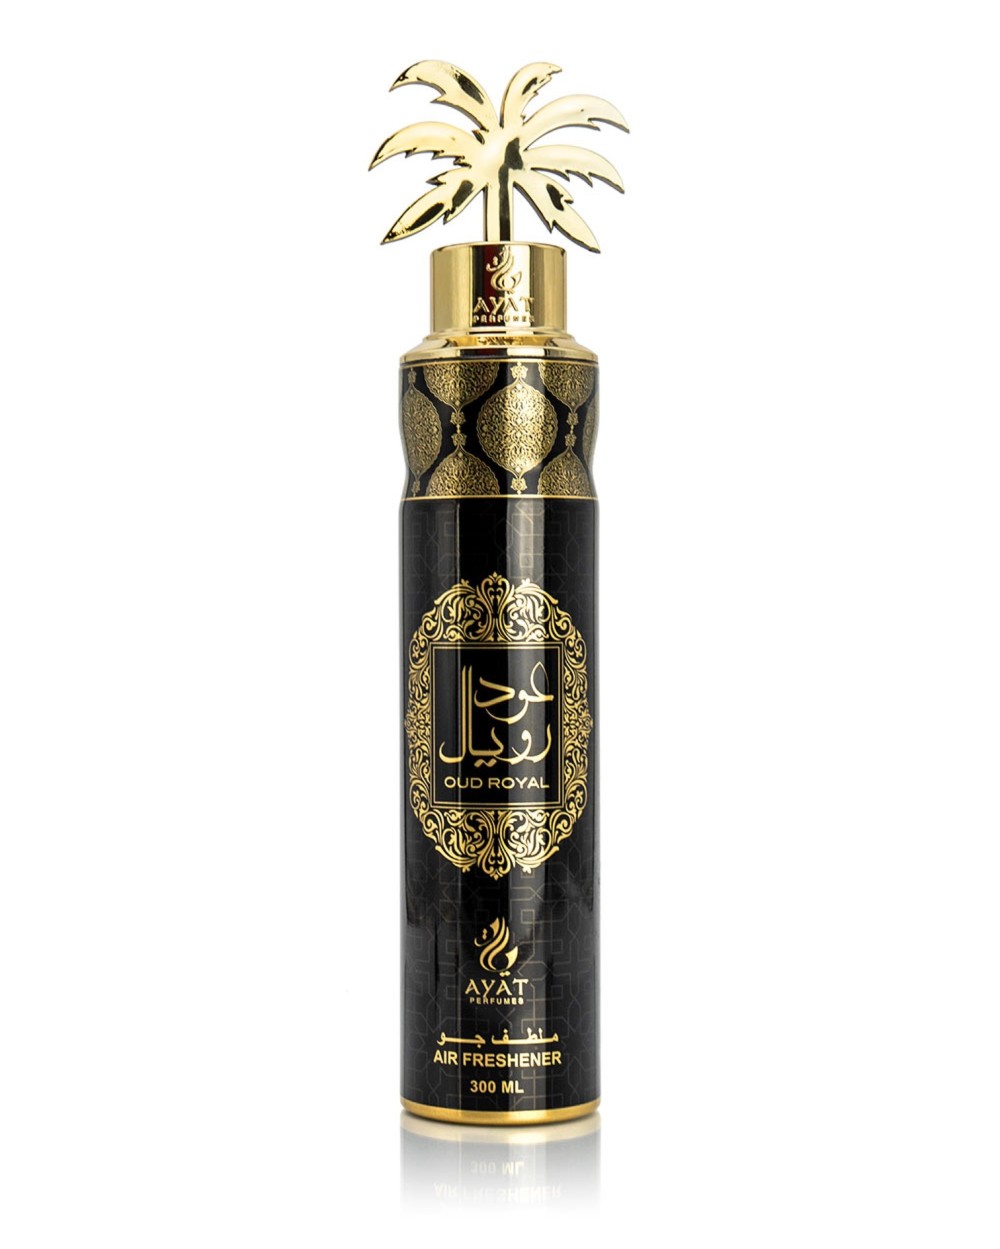 Oud Royal air freshener - Ayat Perfumes